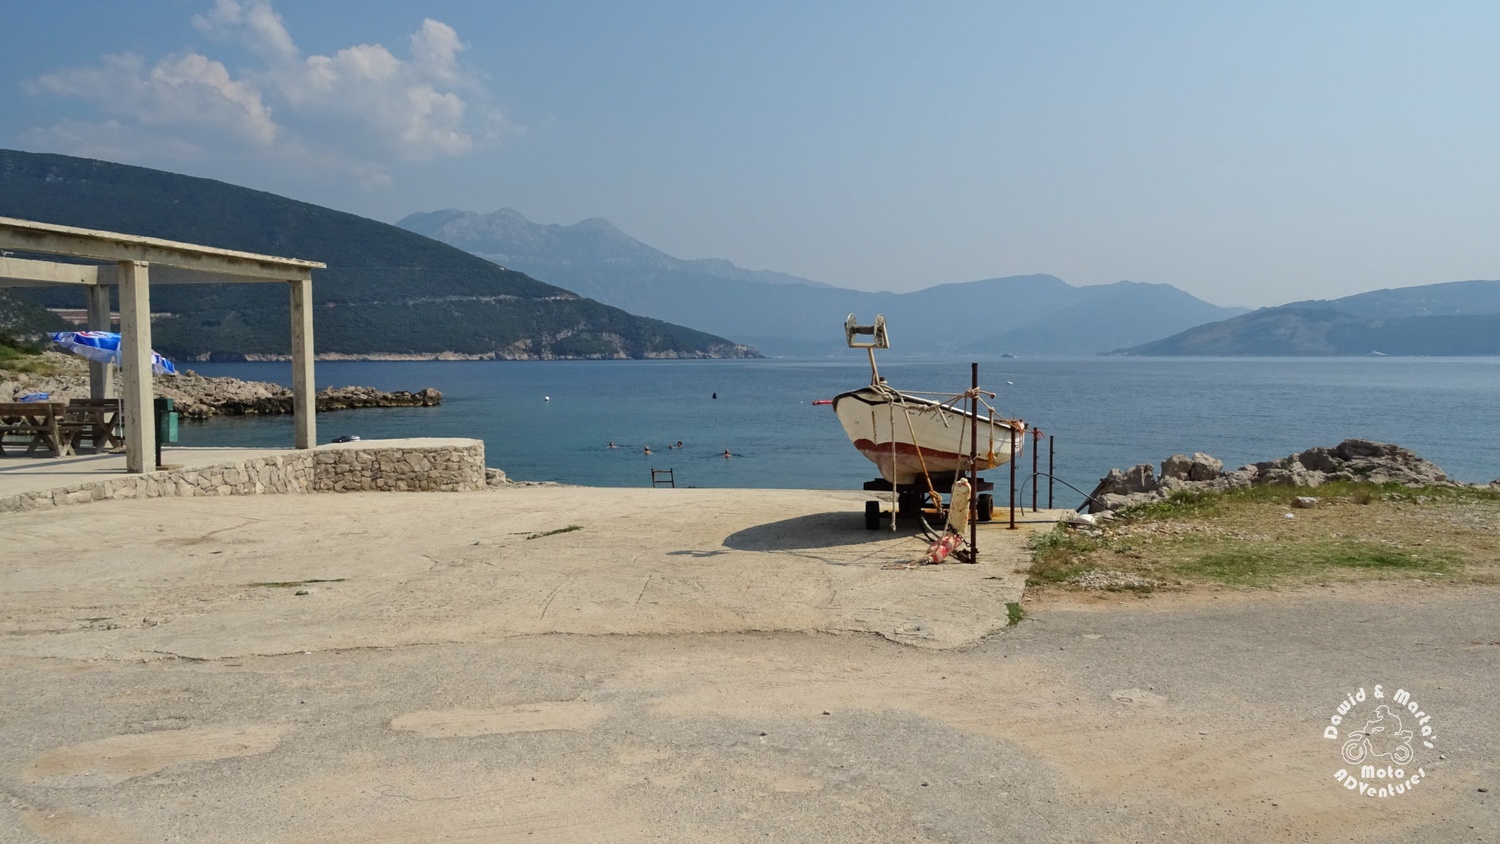 View on the Kotor Bay entrance from the Gusar cafe at Prevlaka peninsula